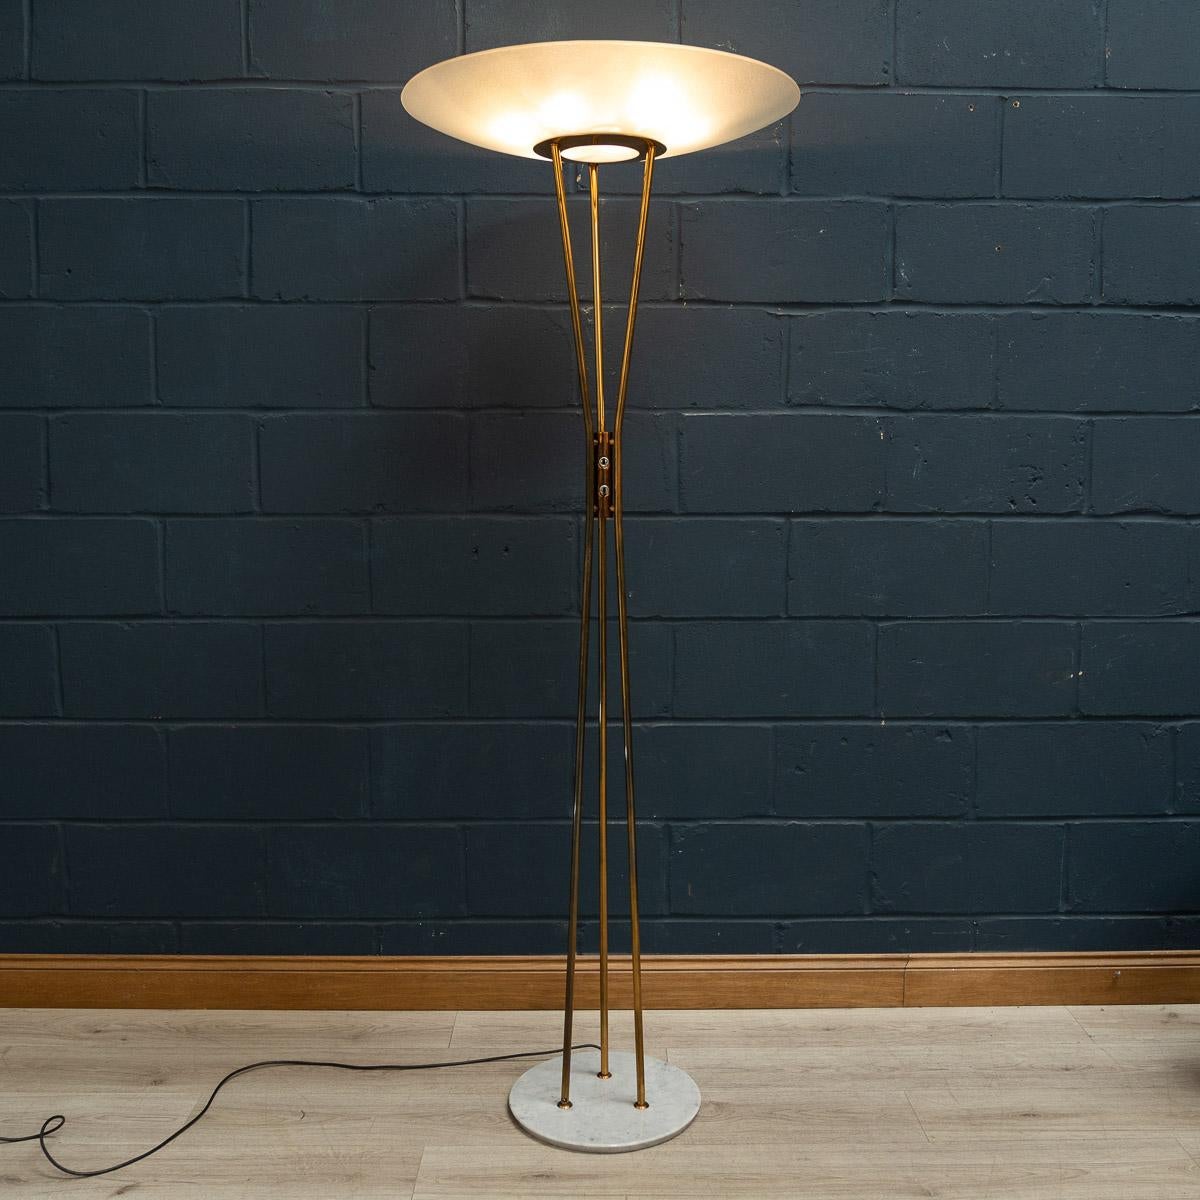 Italian A 'Model 4013' Floor Lamp By Gaetano Sciolari For Stilnovo, Italy, c.1960 For Sale